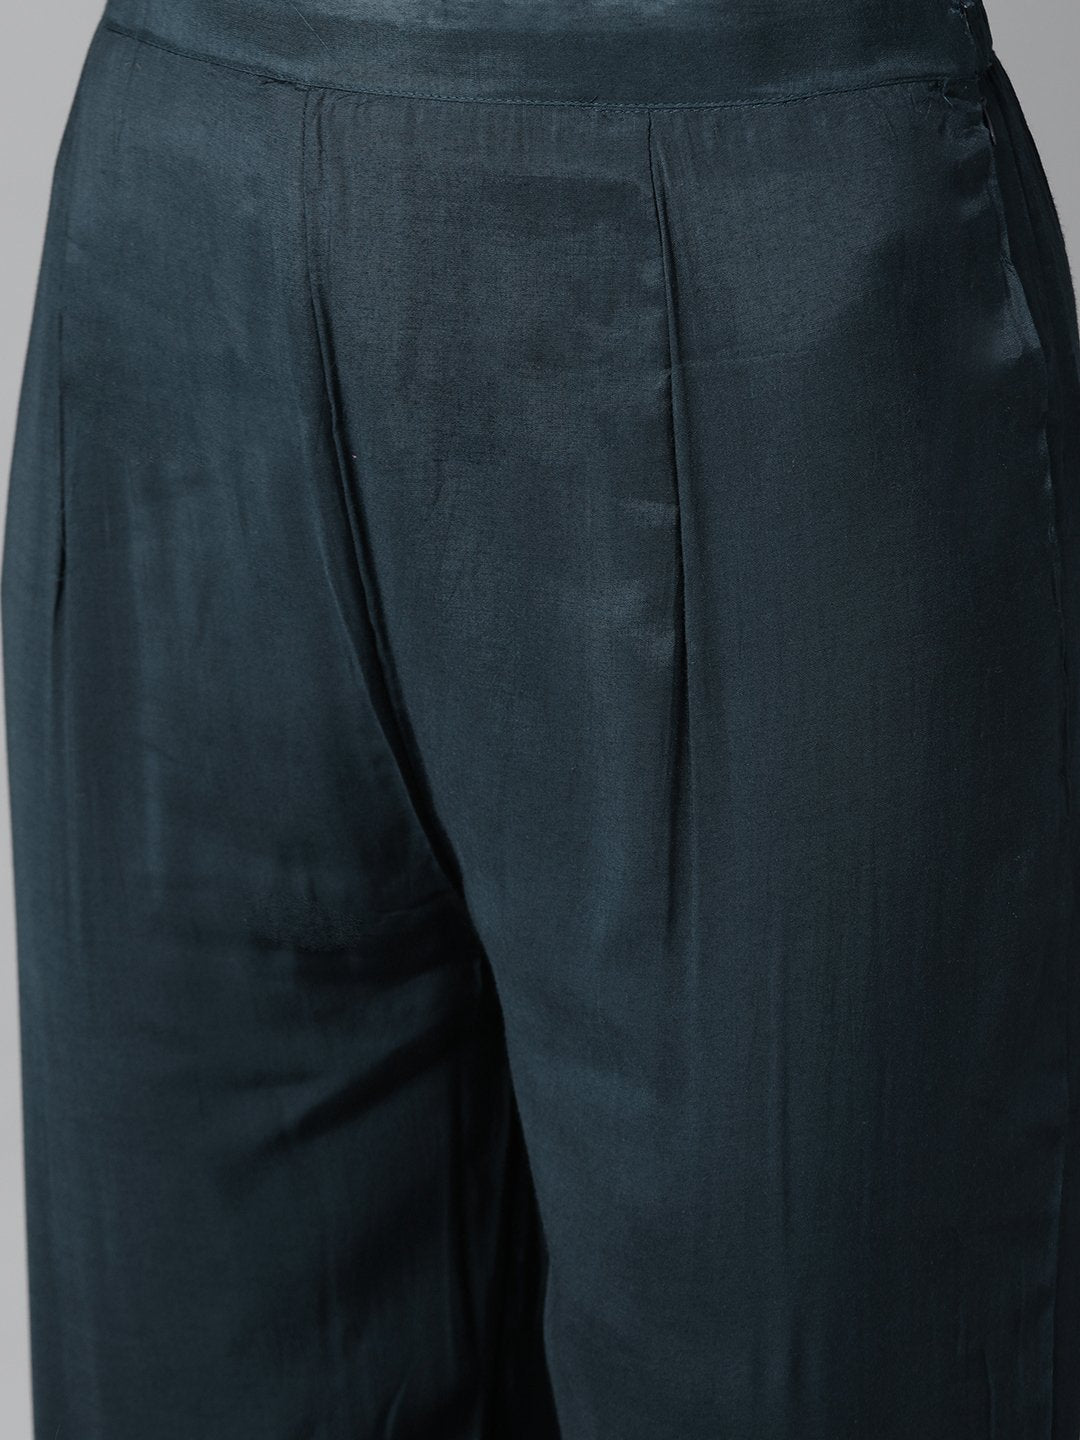 Ishin Women's Navy Blue Embroidered A-Line Kurta Trouser Dupatta Set